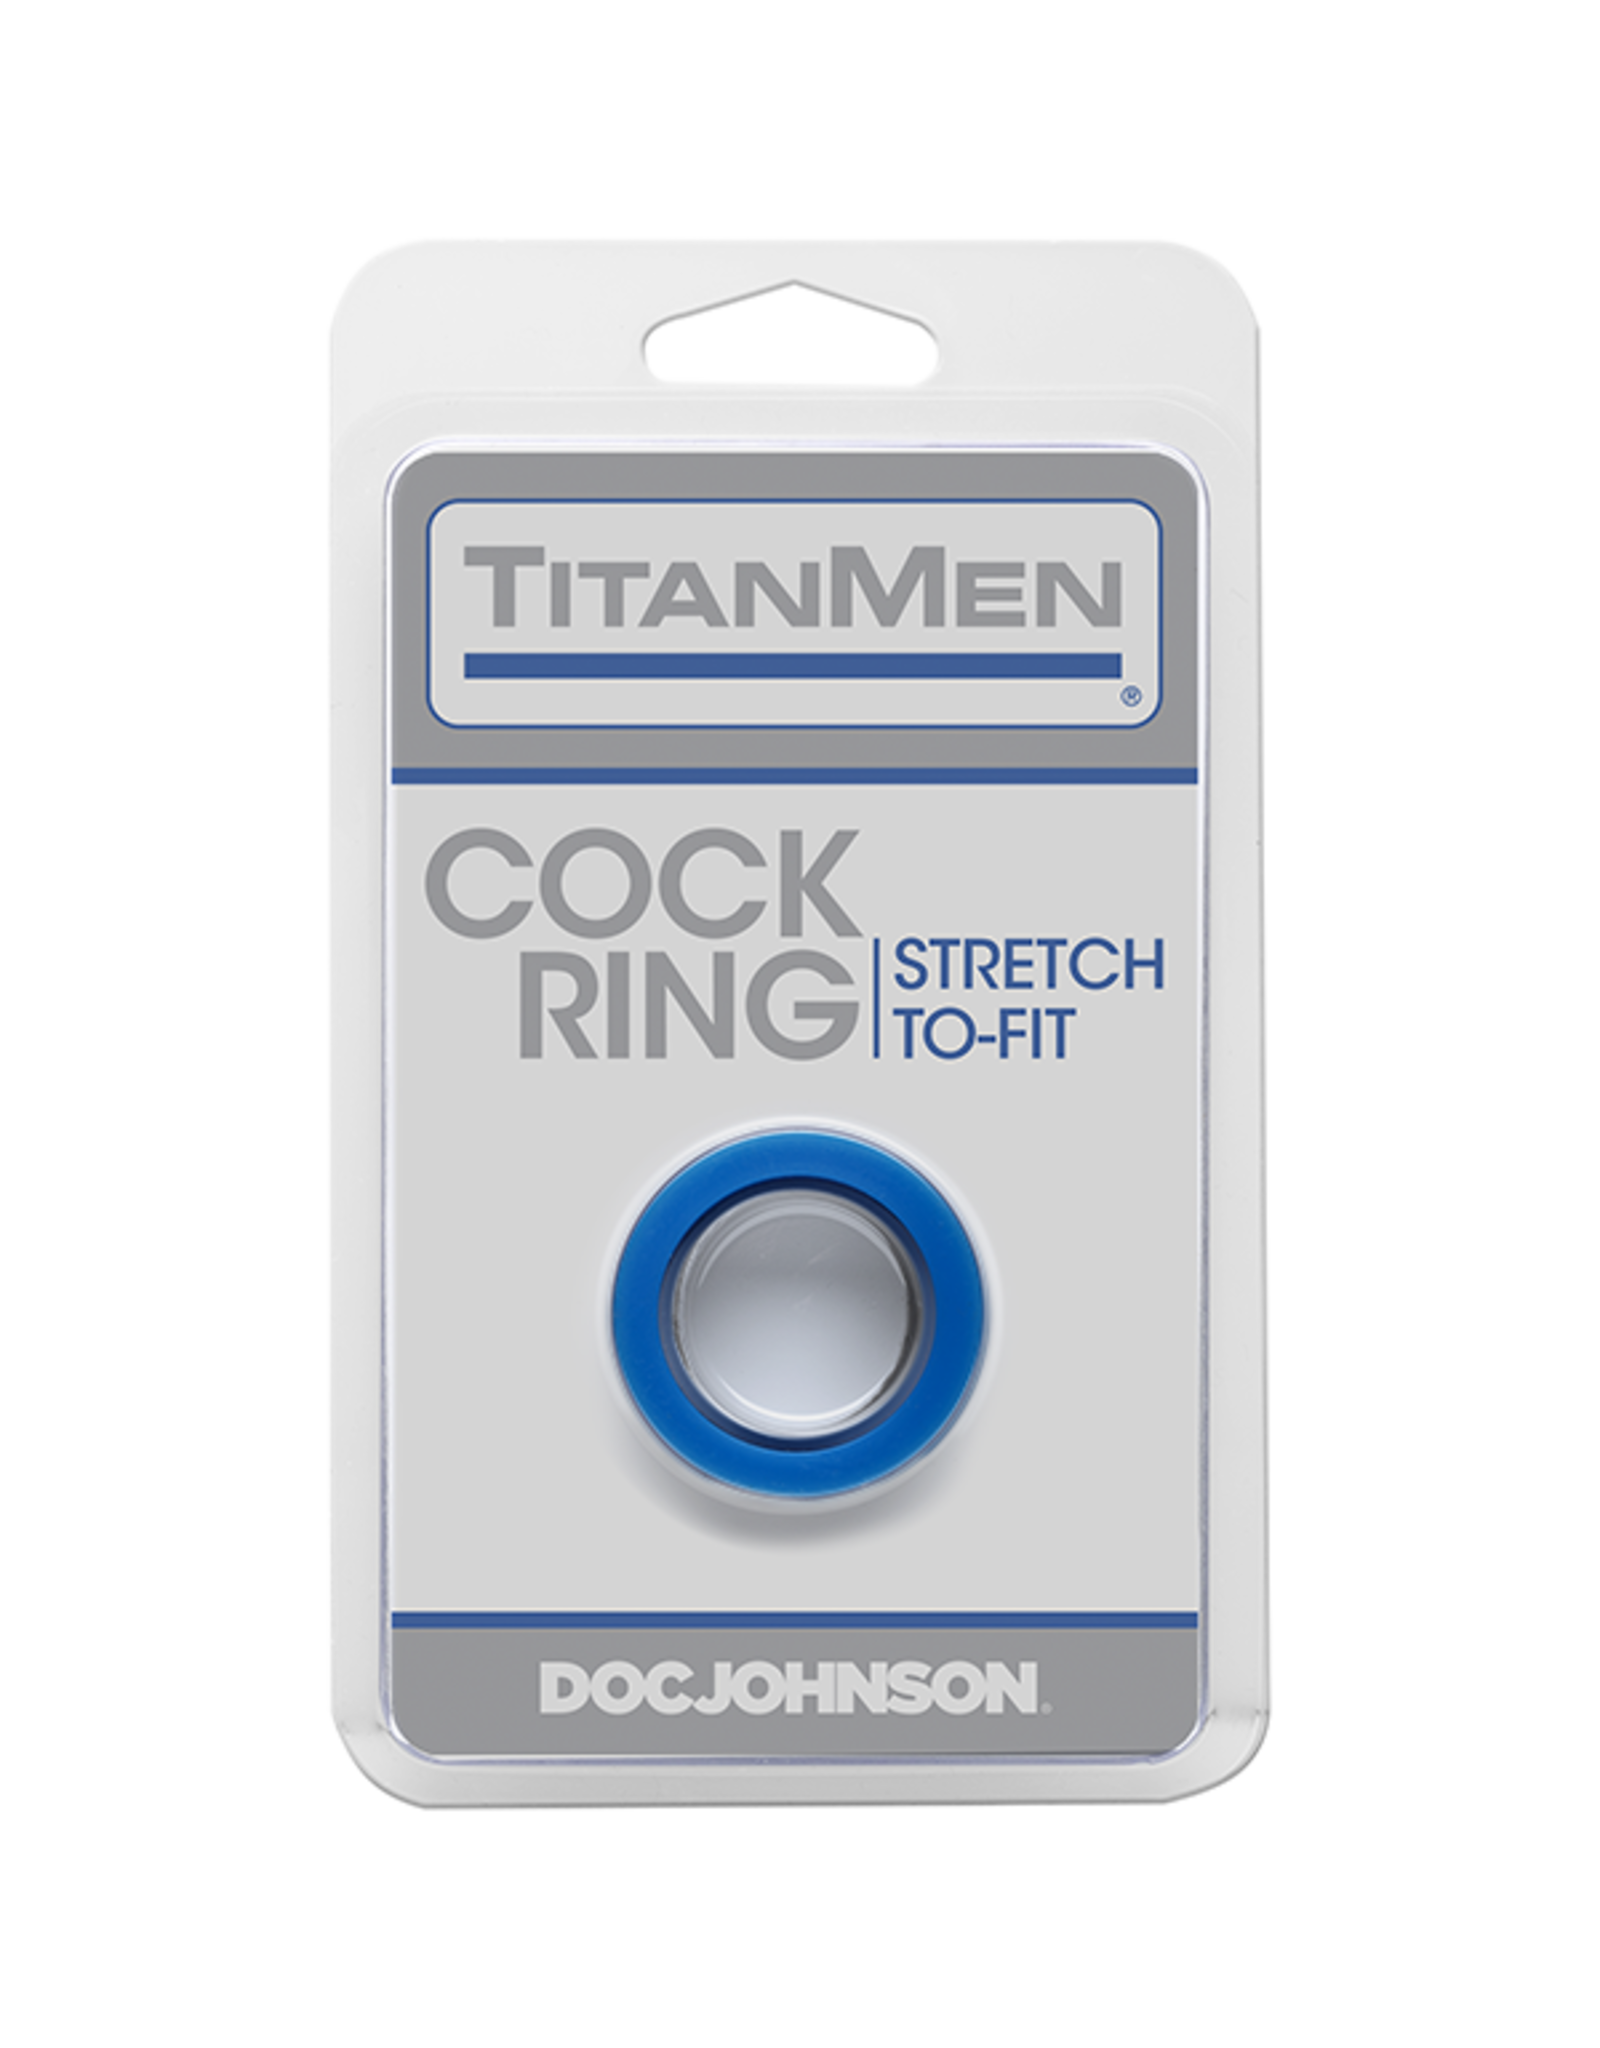 TitanMen TitanMen Cock Ring Stretch to Fit